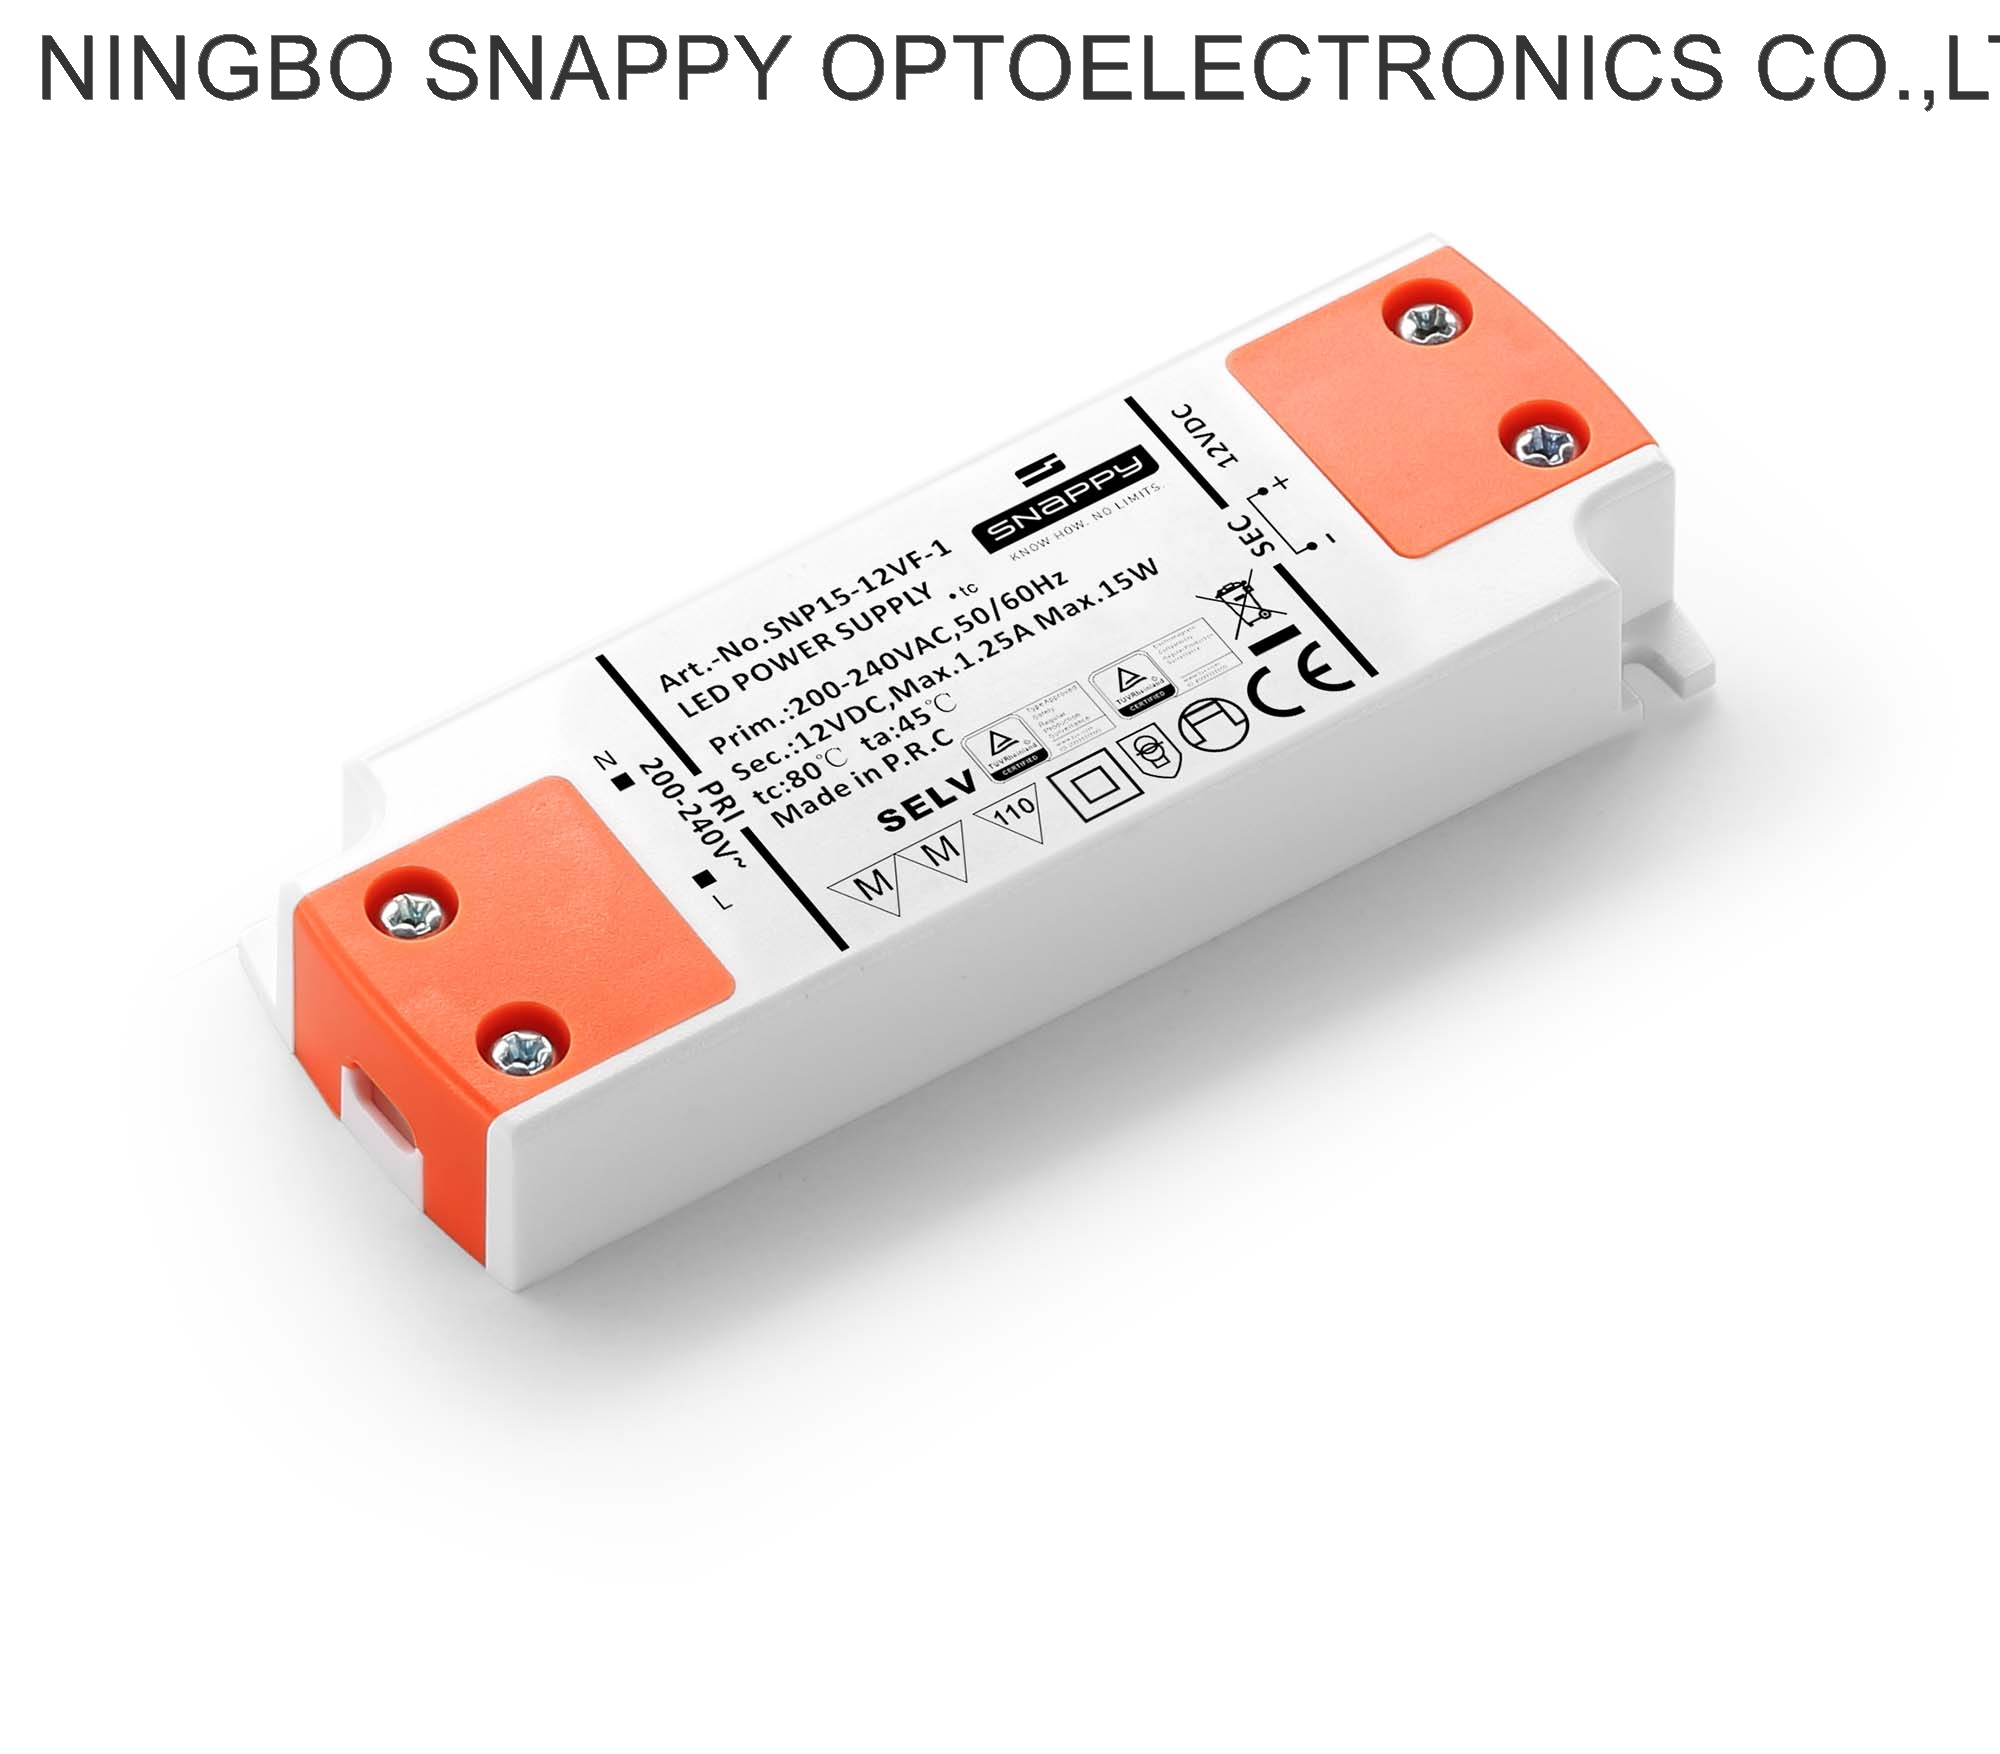 SNP15-12 24VF-1 Input voltage 200-240VAC 15W 12V 24V IP20 super slim thickness 16mm LED DRIVER